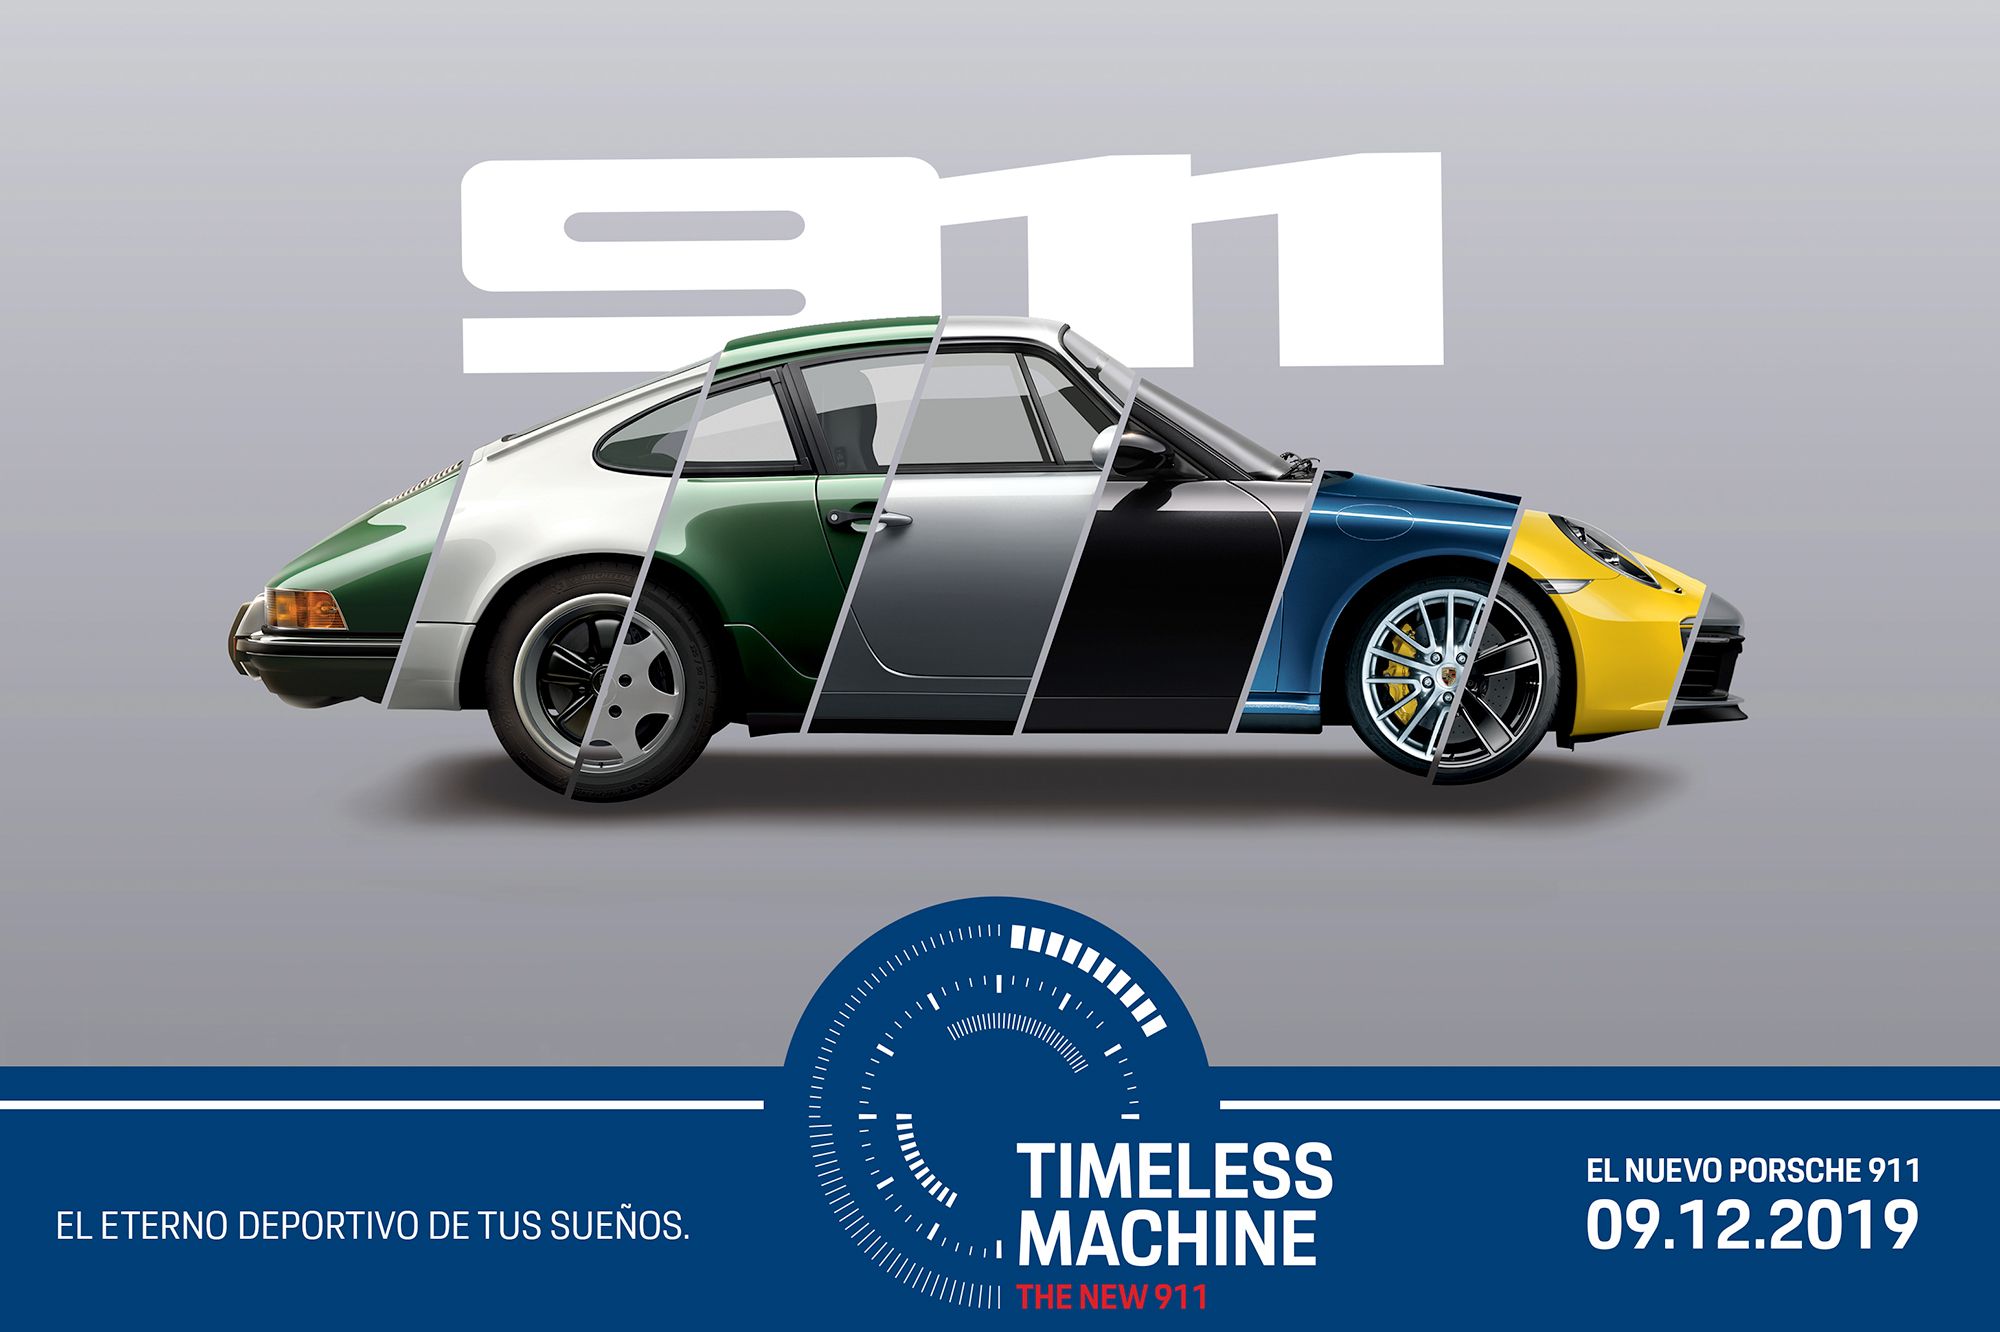 Porsche Poster Design 911 Collage